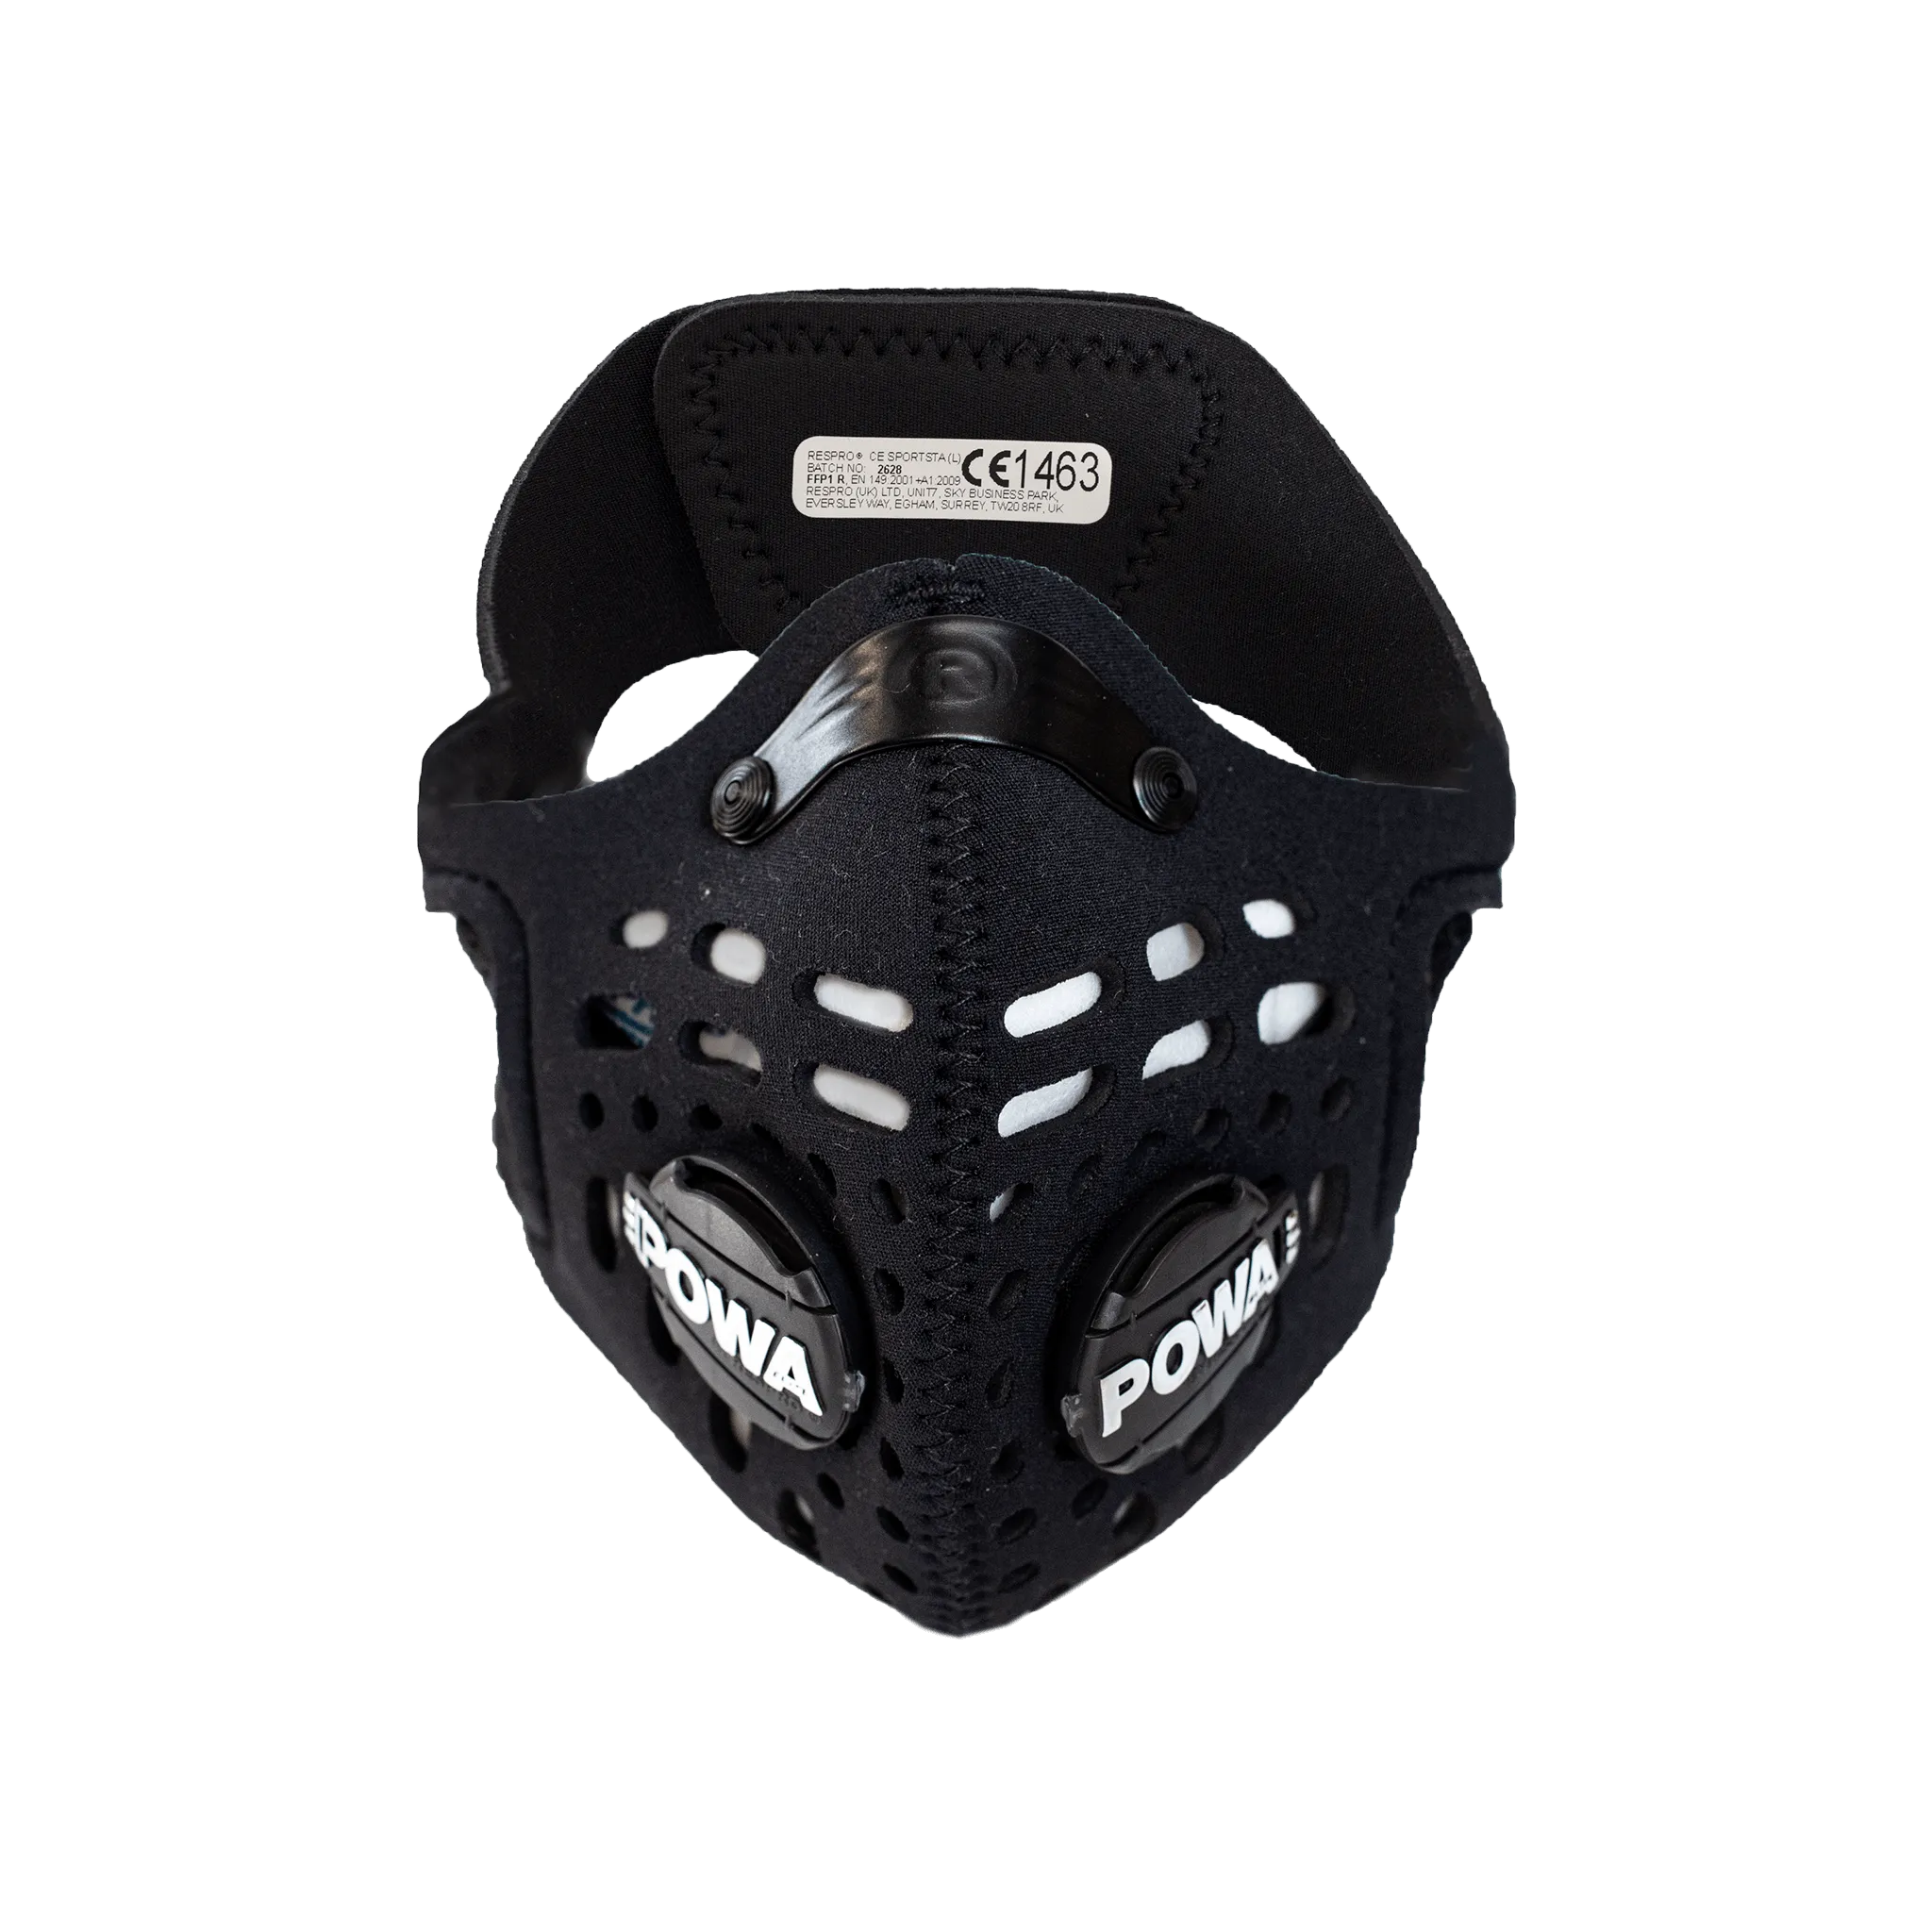 Respro CE Sportsta Black, maska antysmogowa, rozmiar M, 1 sztuka